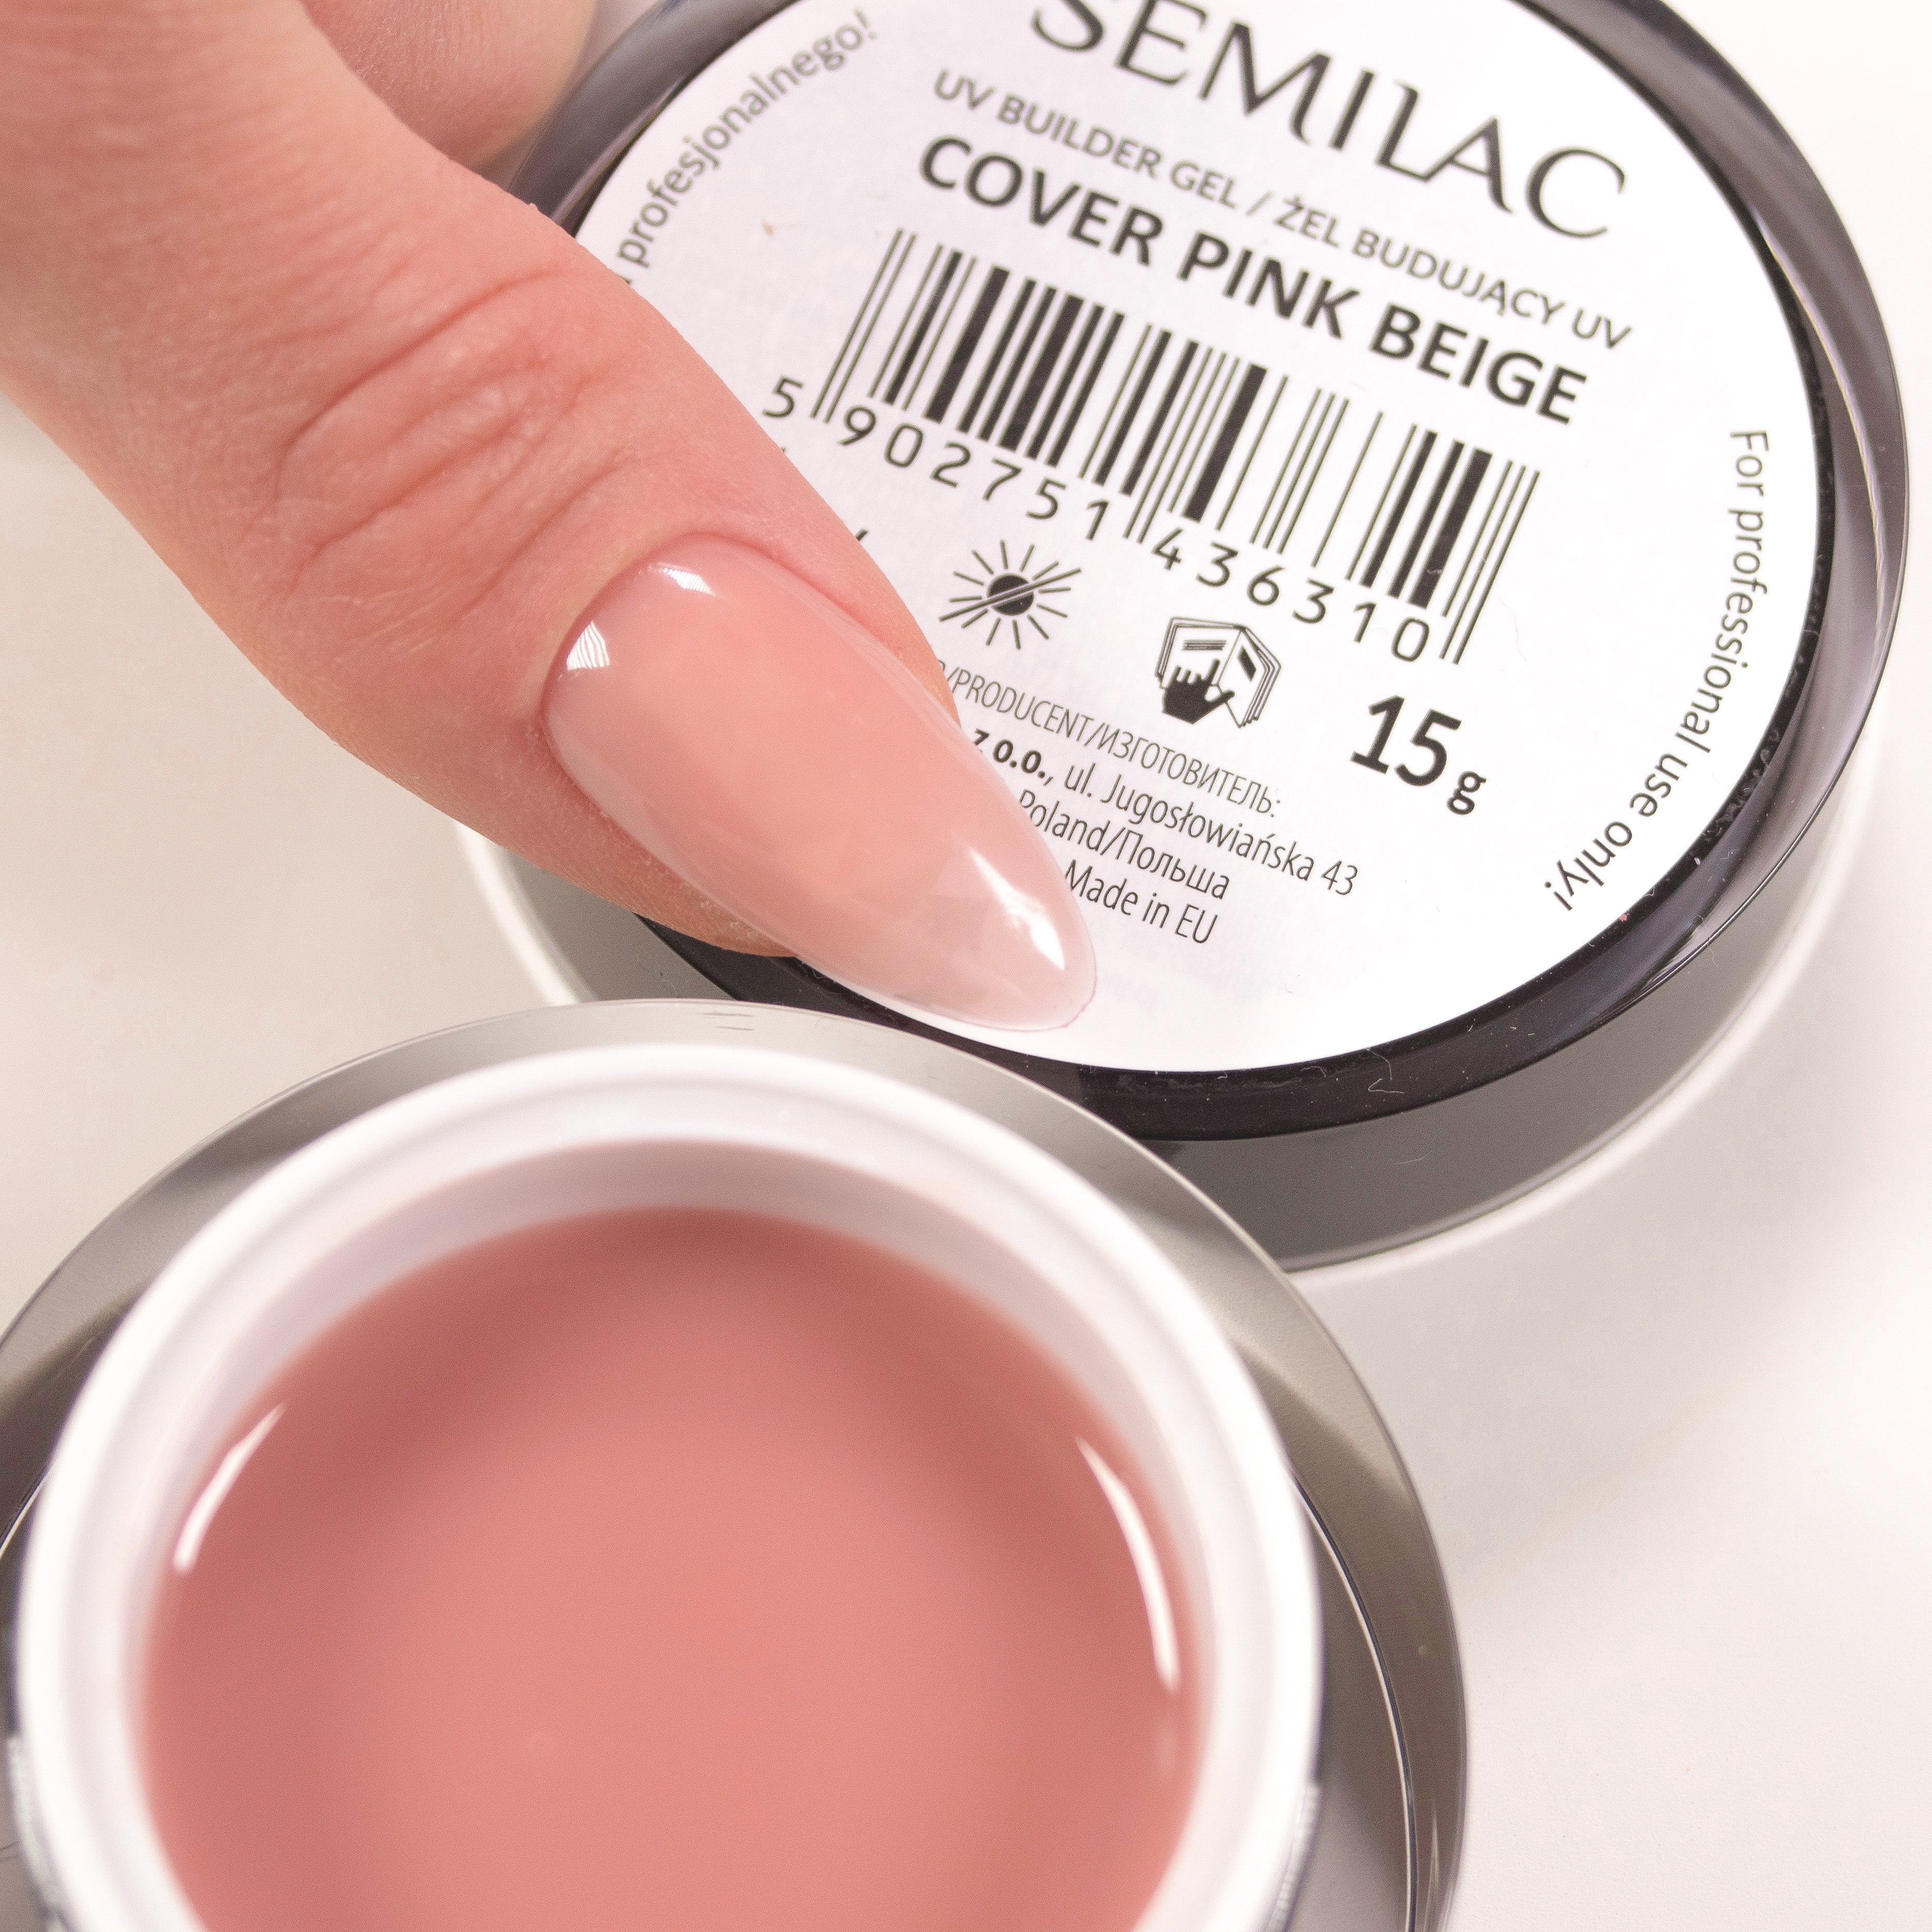 Semilac Builder Gel Cover Pink Beige 15g - Semilac UK